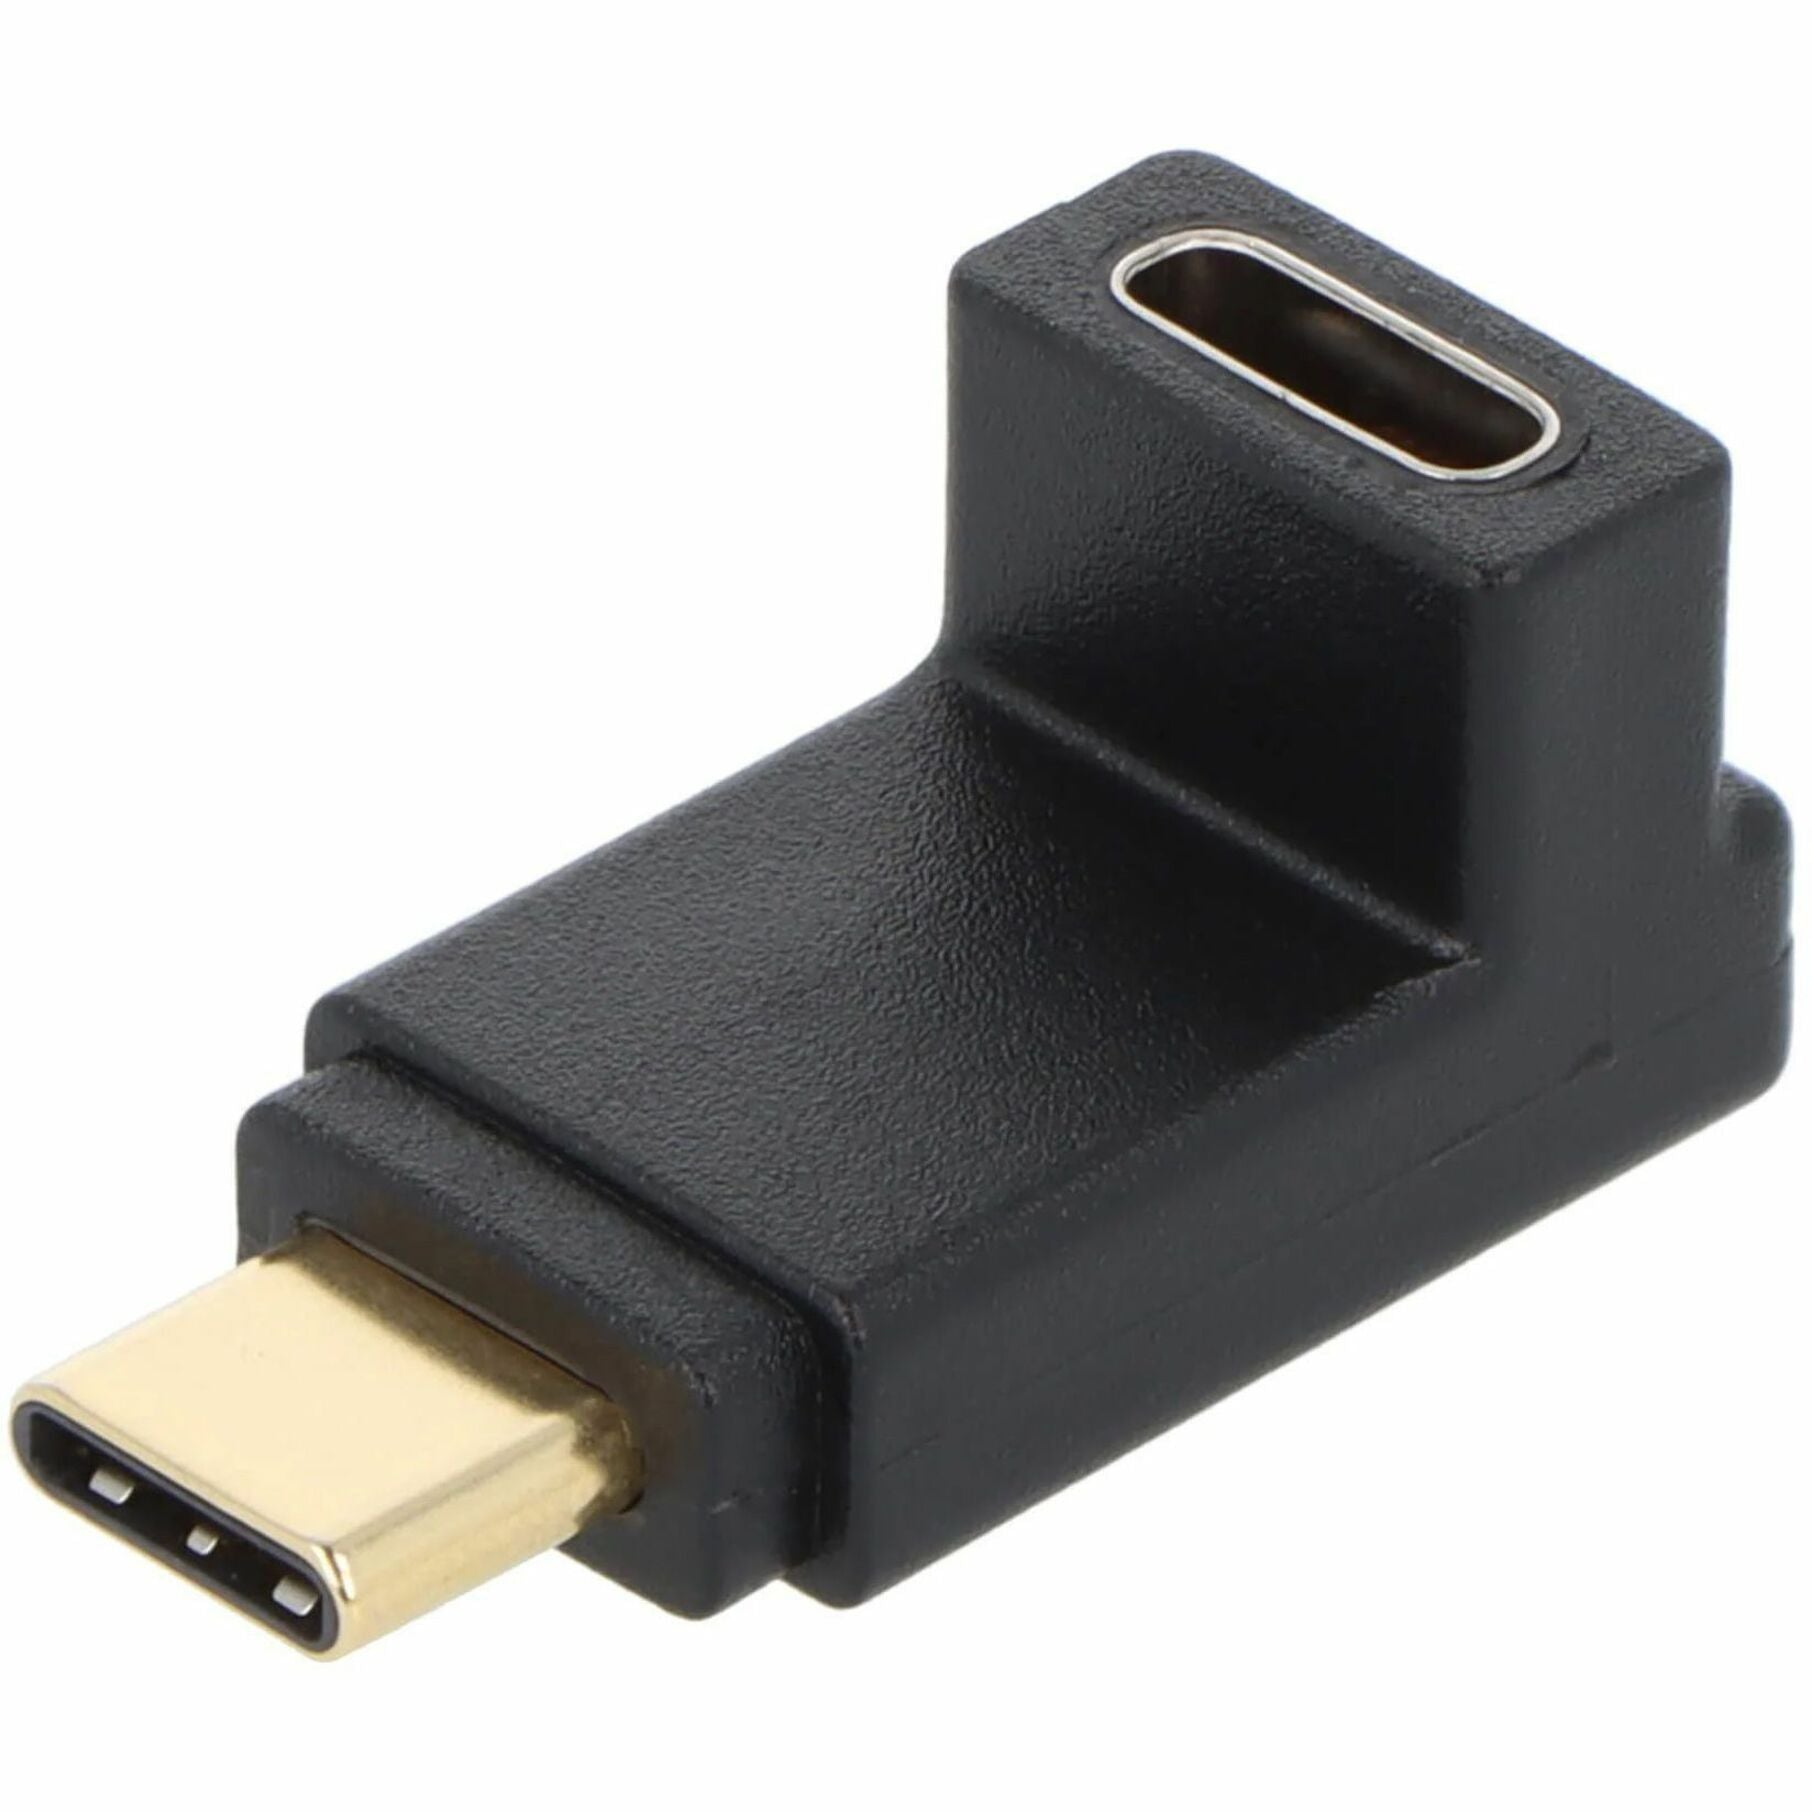 VisionTek 901431 USB-C Data Transfer Adapter, 90° Angled Connector